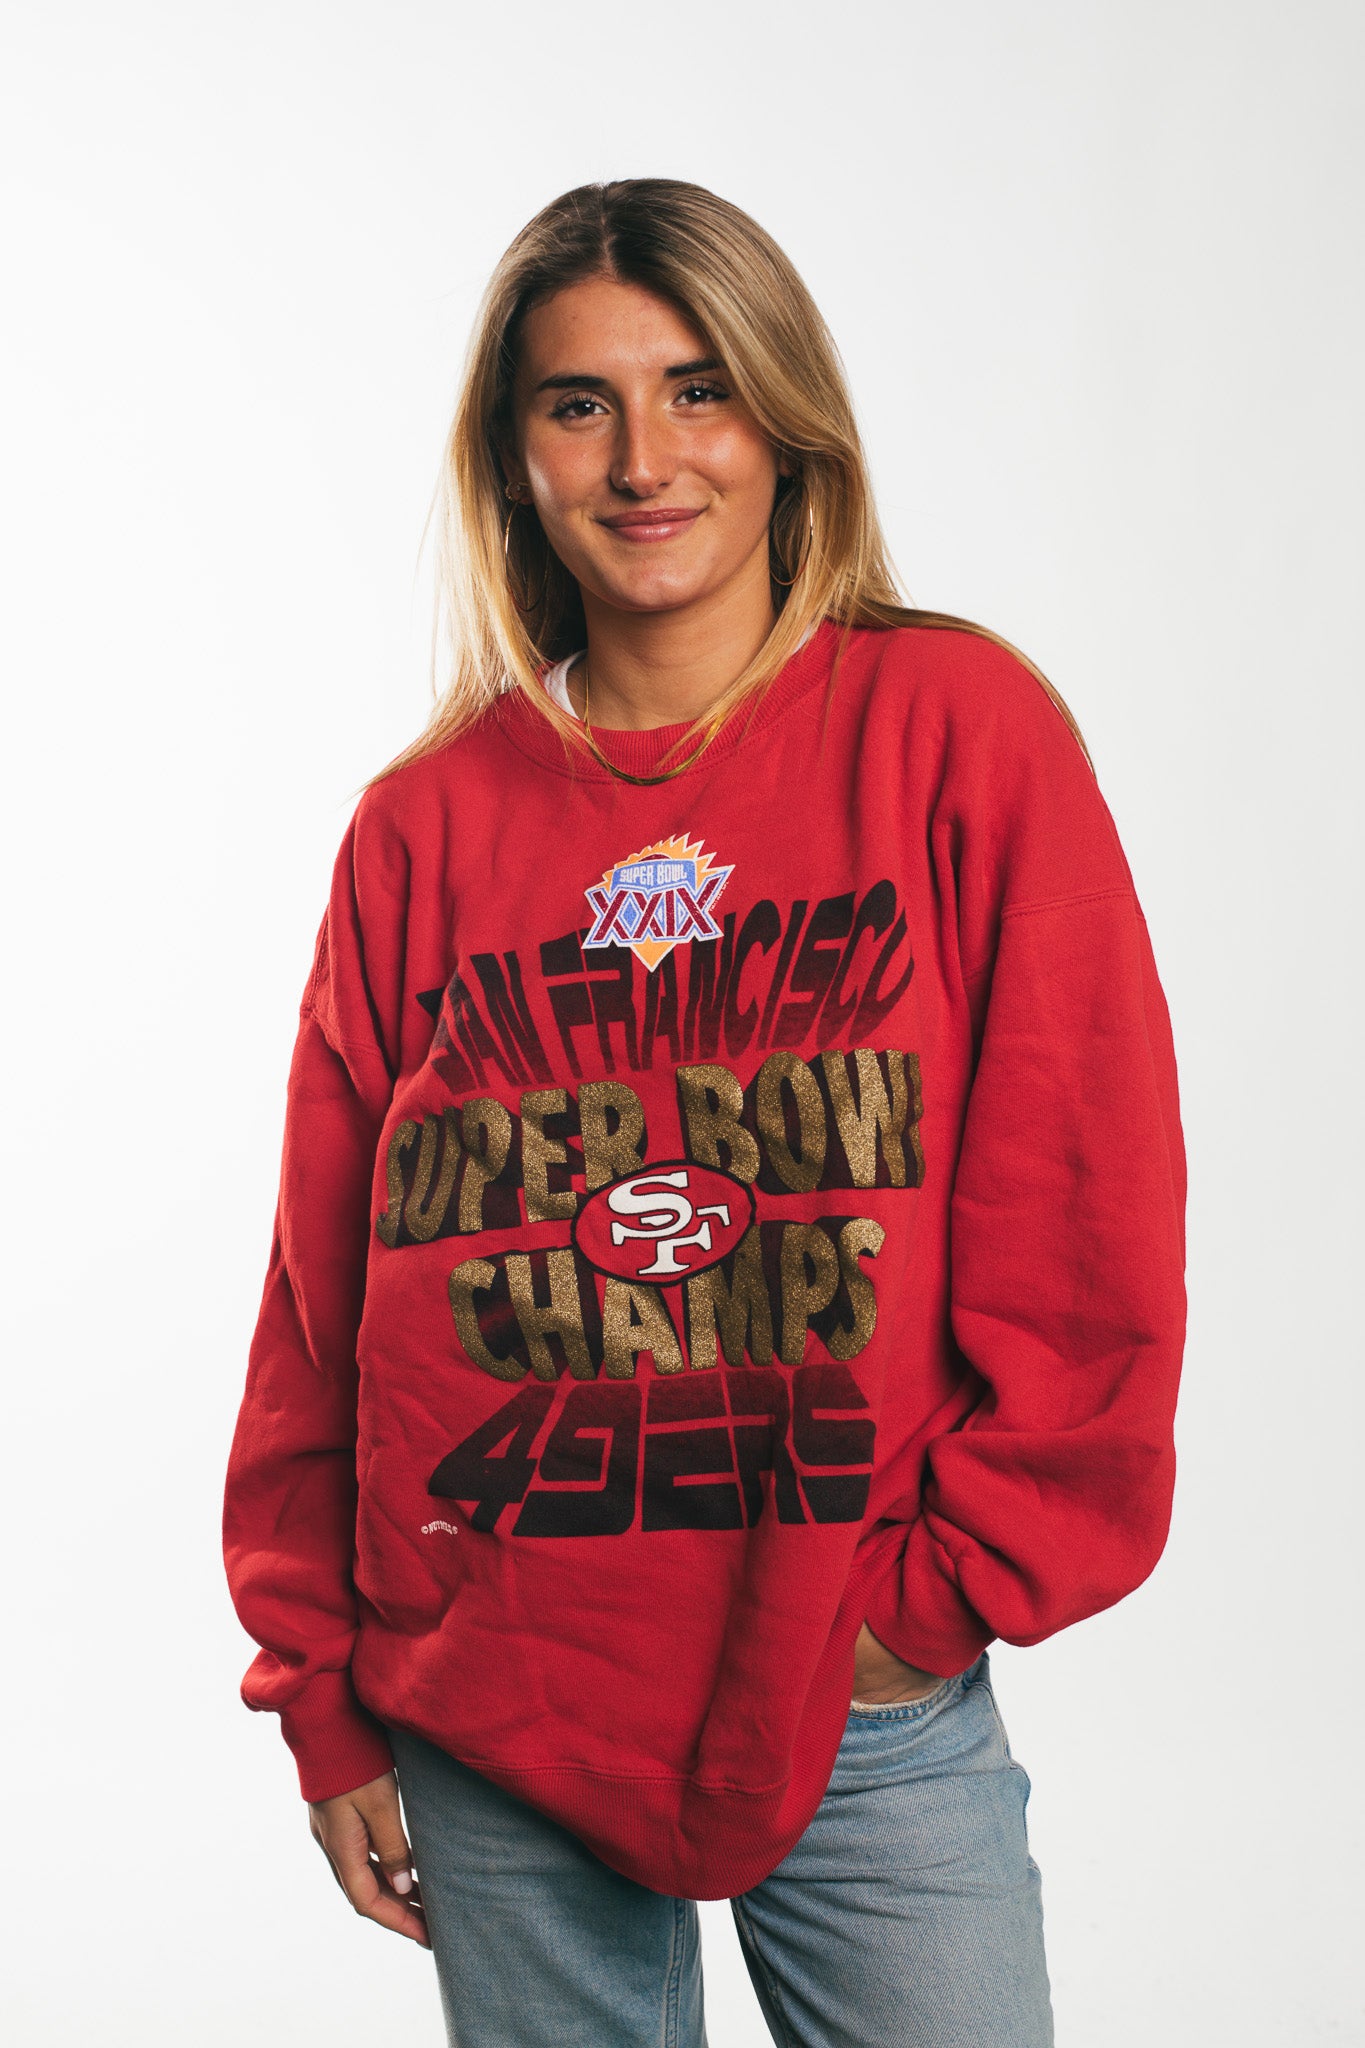 Super Bowl Champions - Sweatshirt (XL)